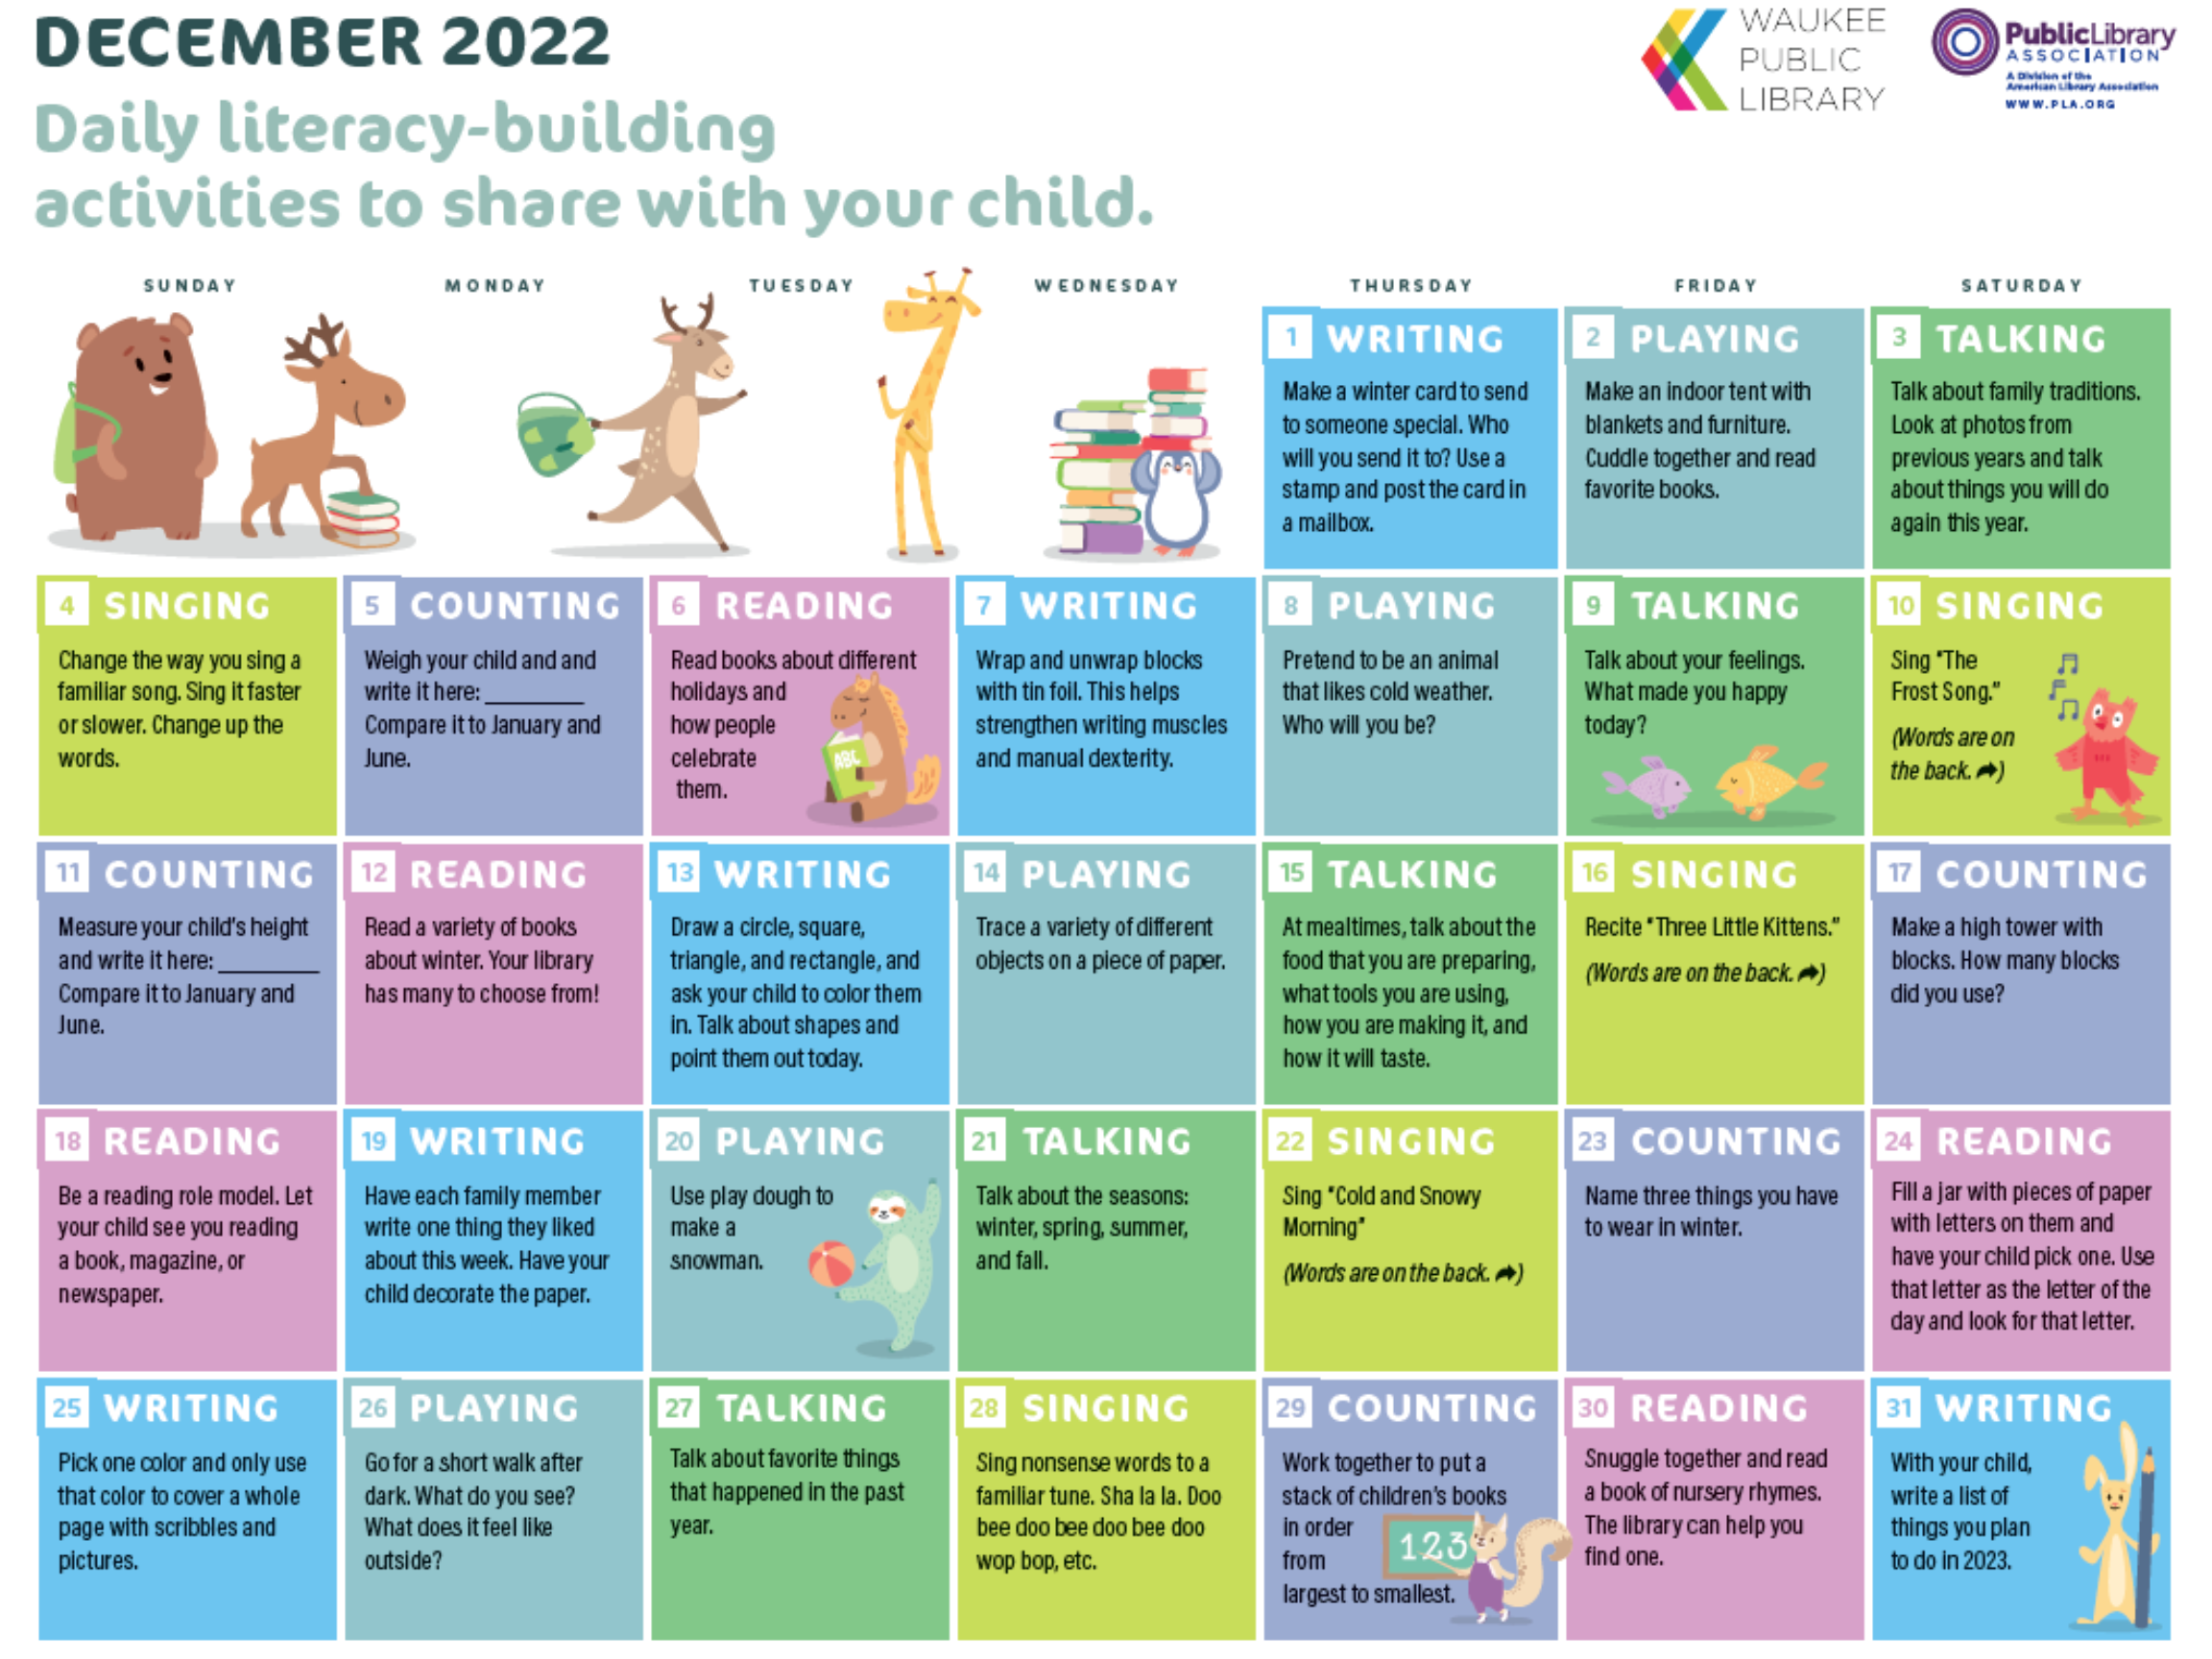 Image of December 2022 early literacy calendar.